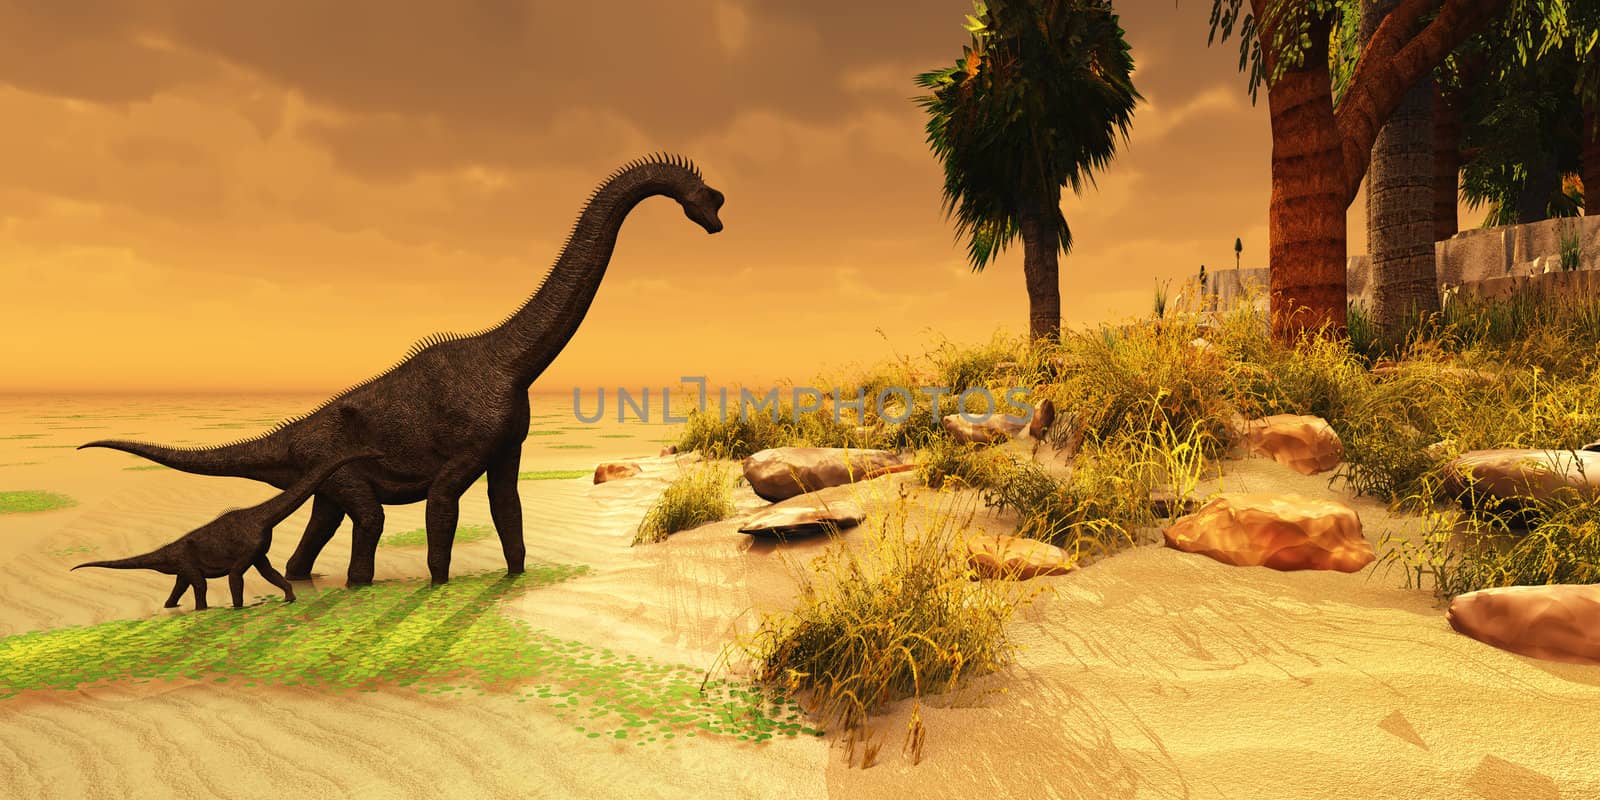 A mother Brachiosaurus Dinosaur brings her offsring to an island habitat in the Jurassic Era.